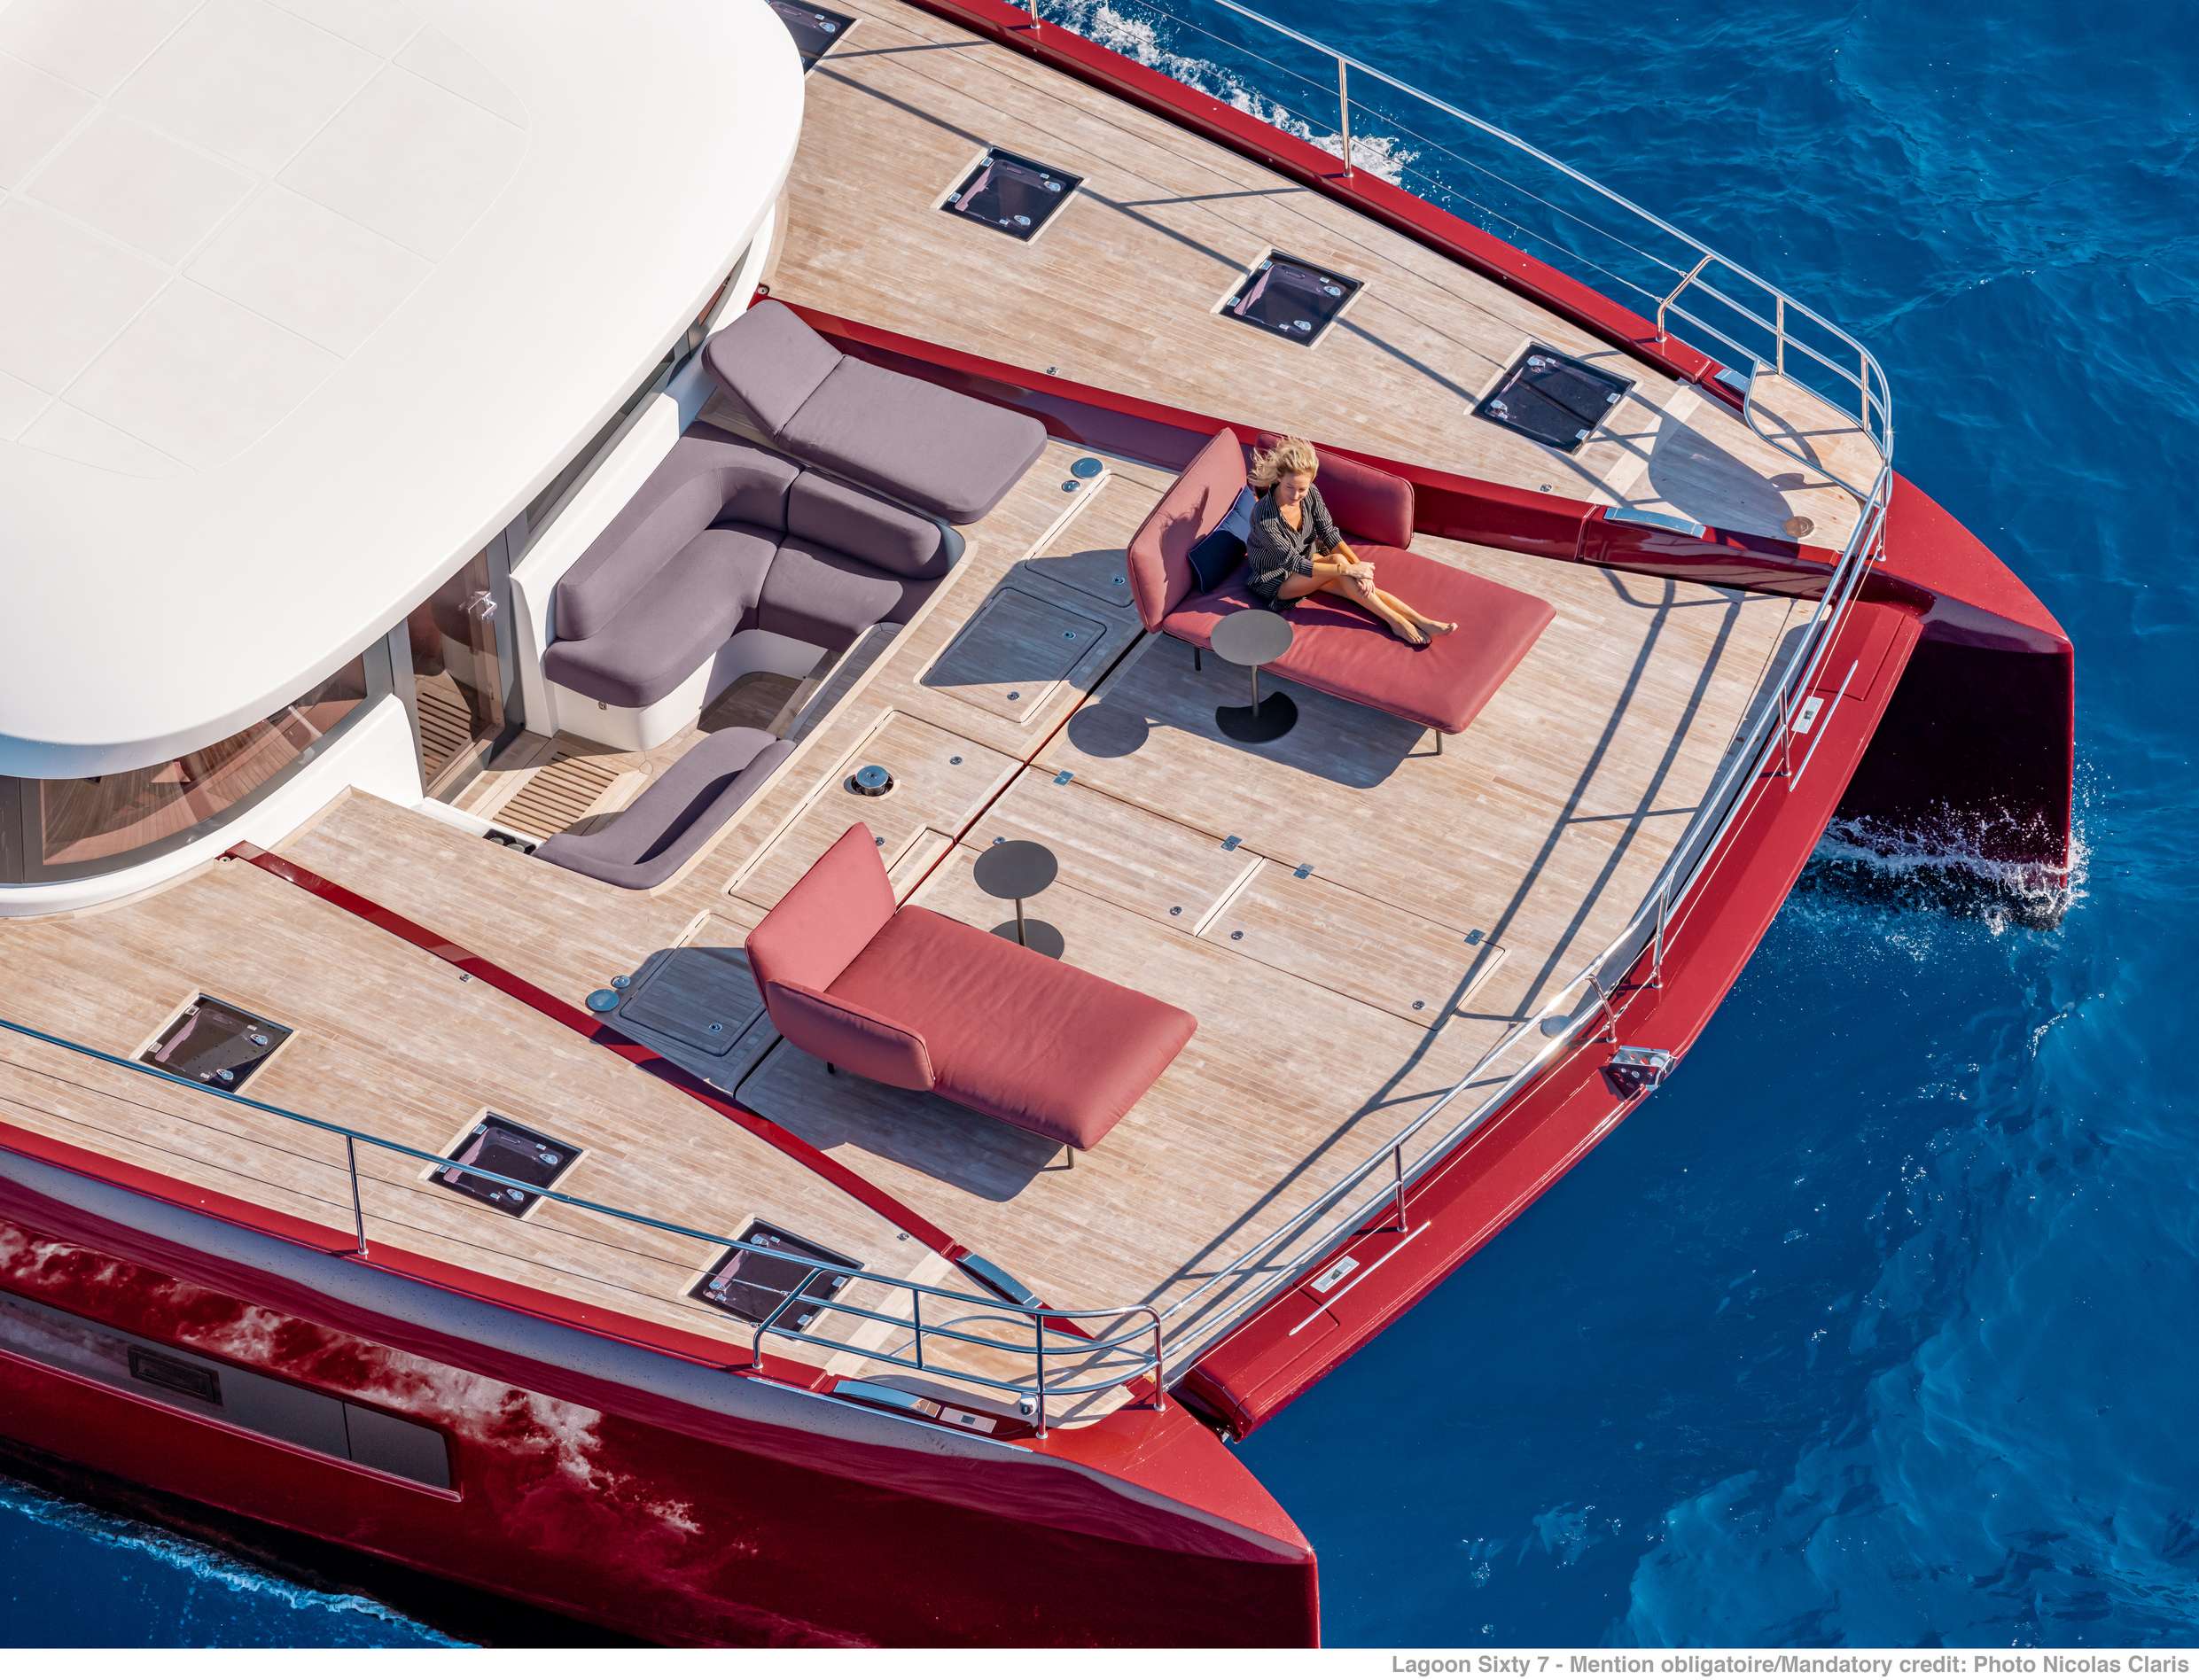 VALIUM 67 - Motor Boat Charter worldwide & Boat hire in Greece 6